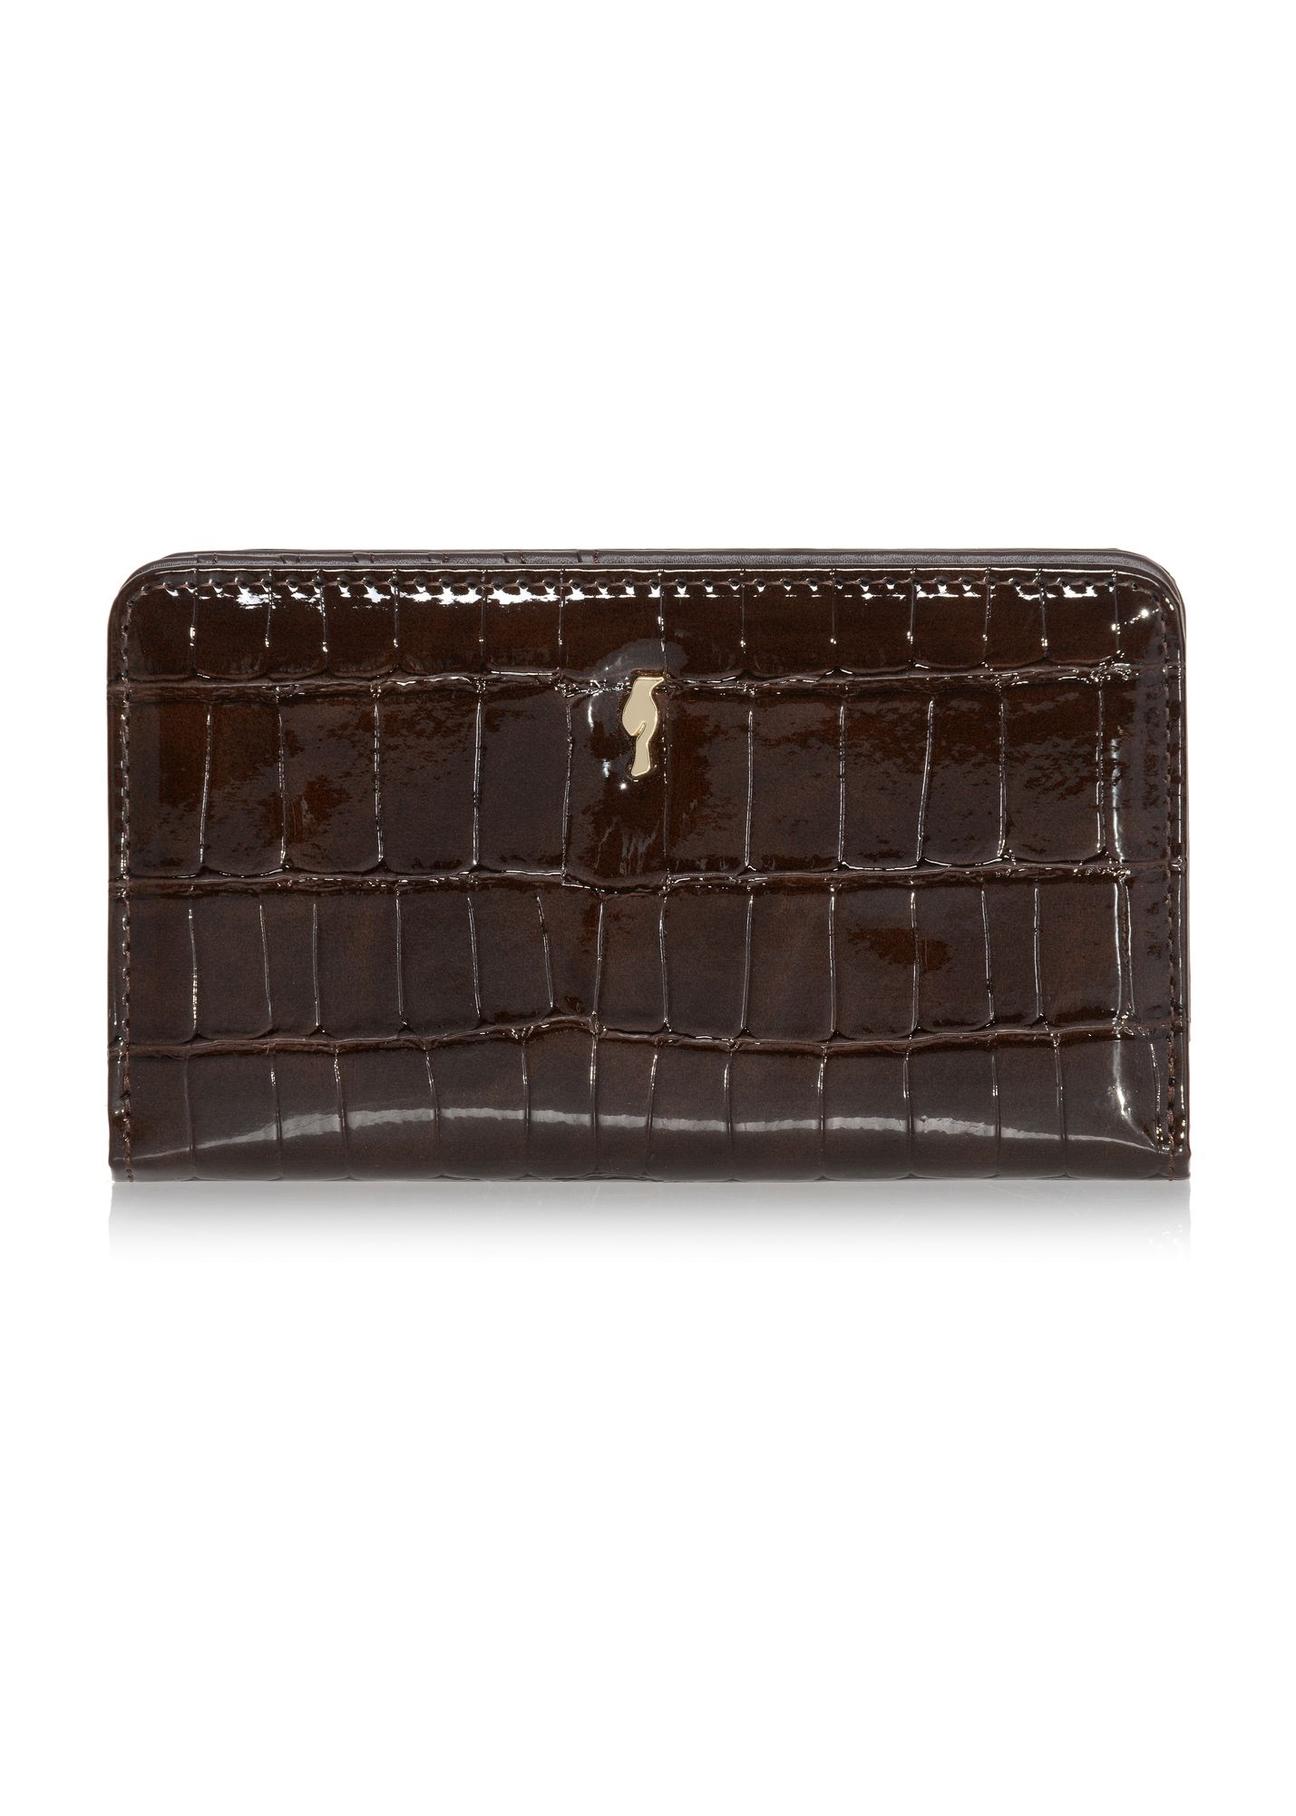 Brązowy portfel damski croco POREC-0353-90(Z23)